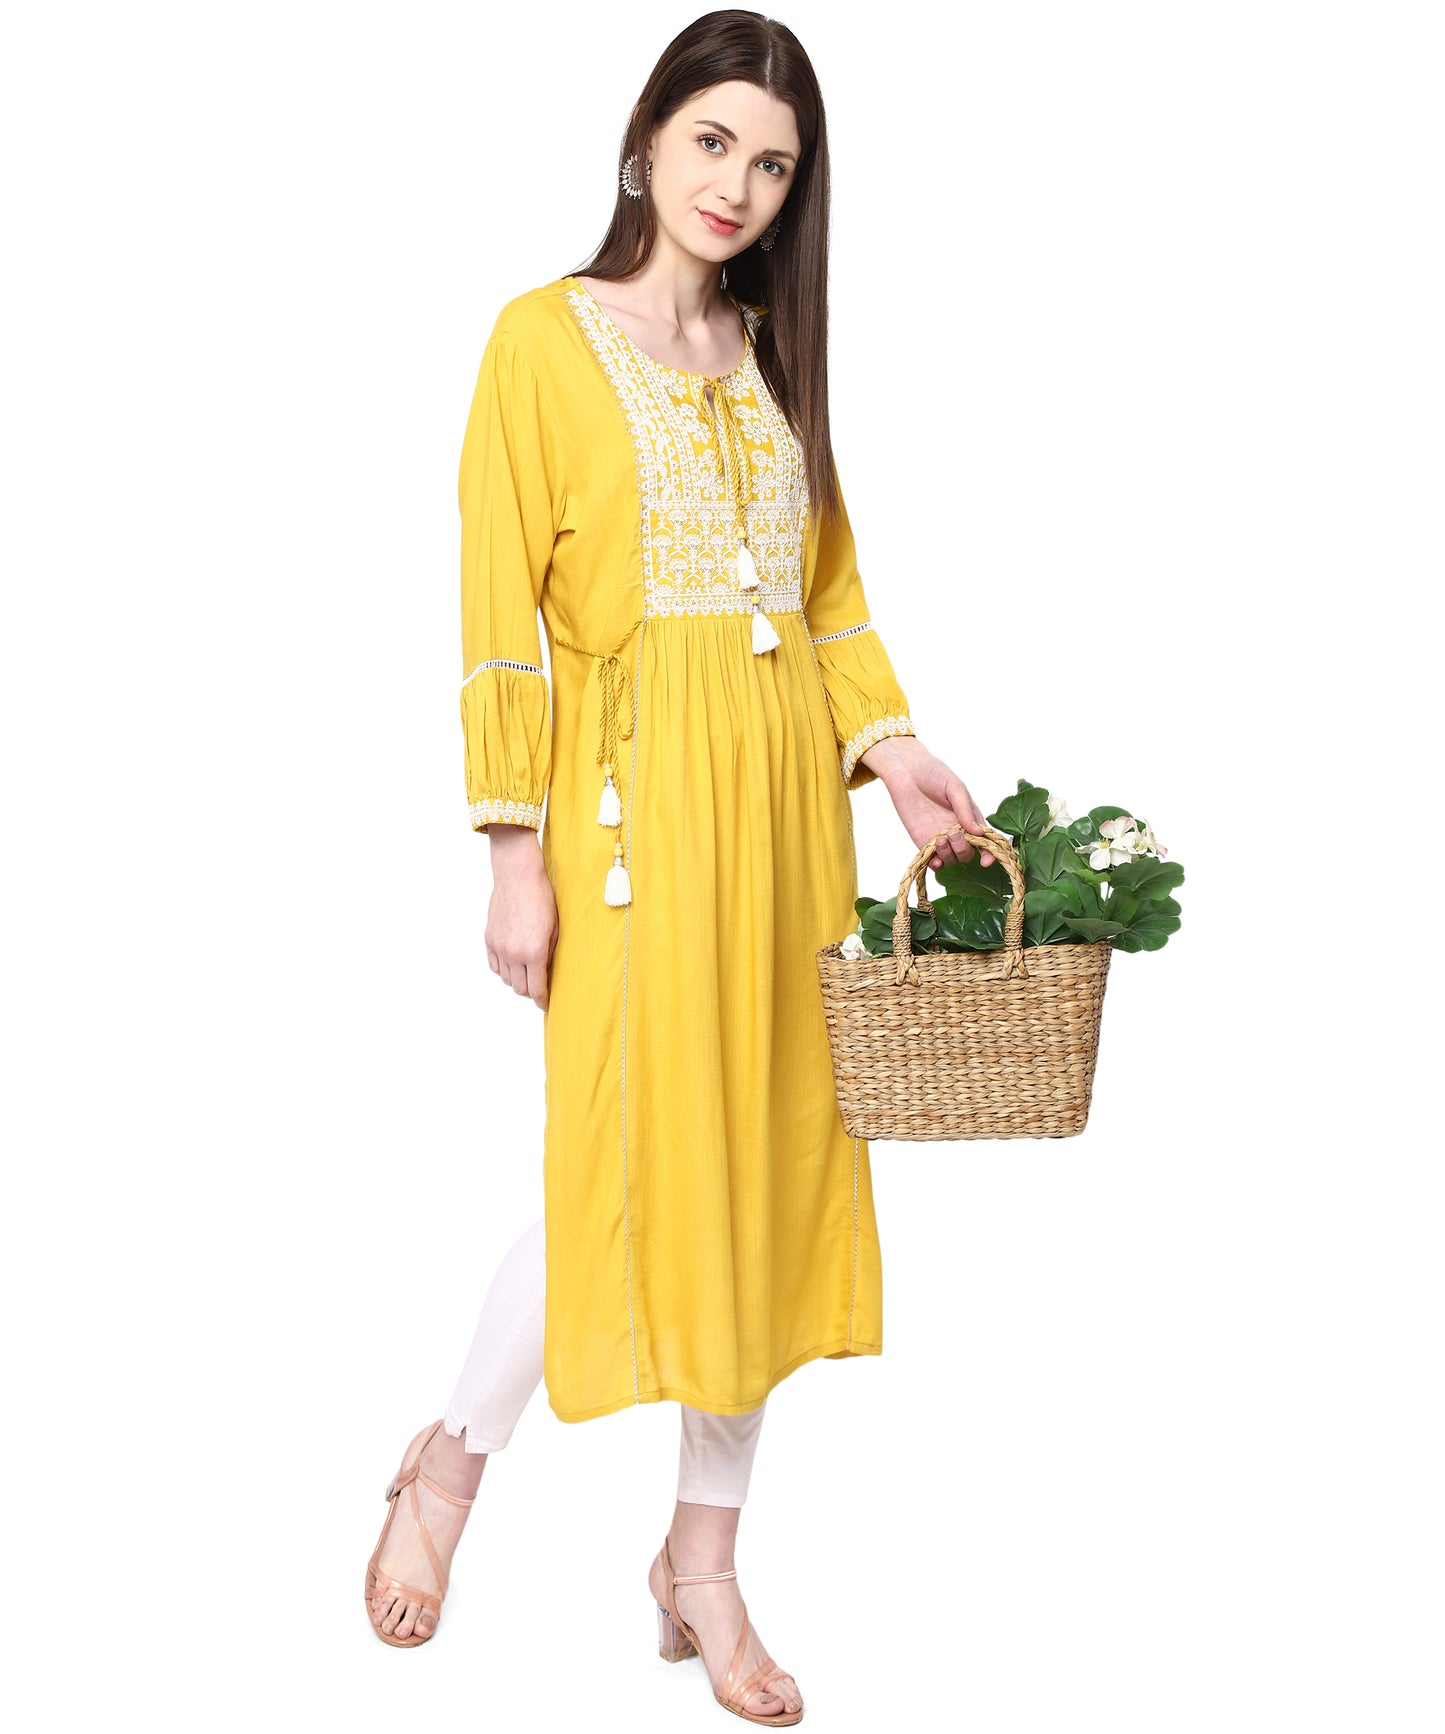 Amazing yellow color Lucknowi style kurta set buy now